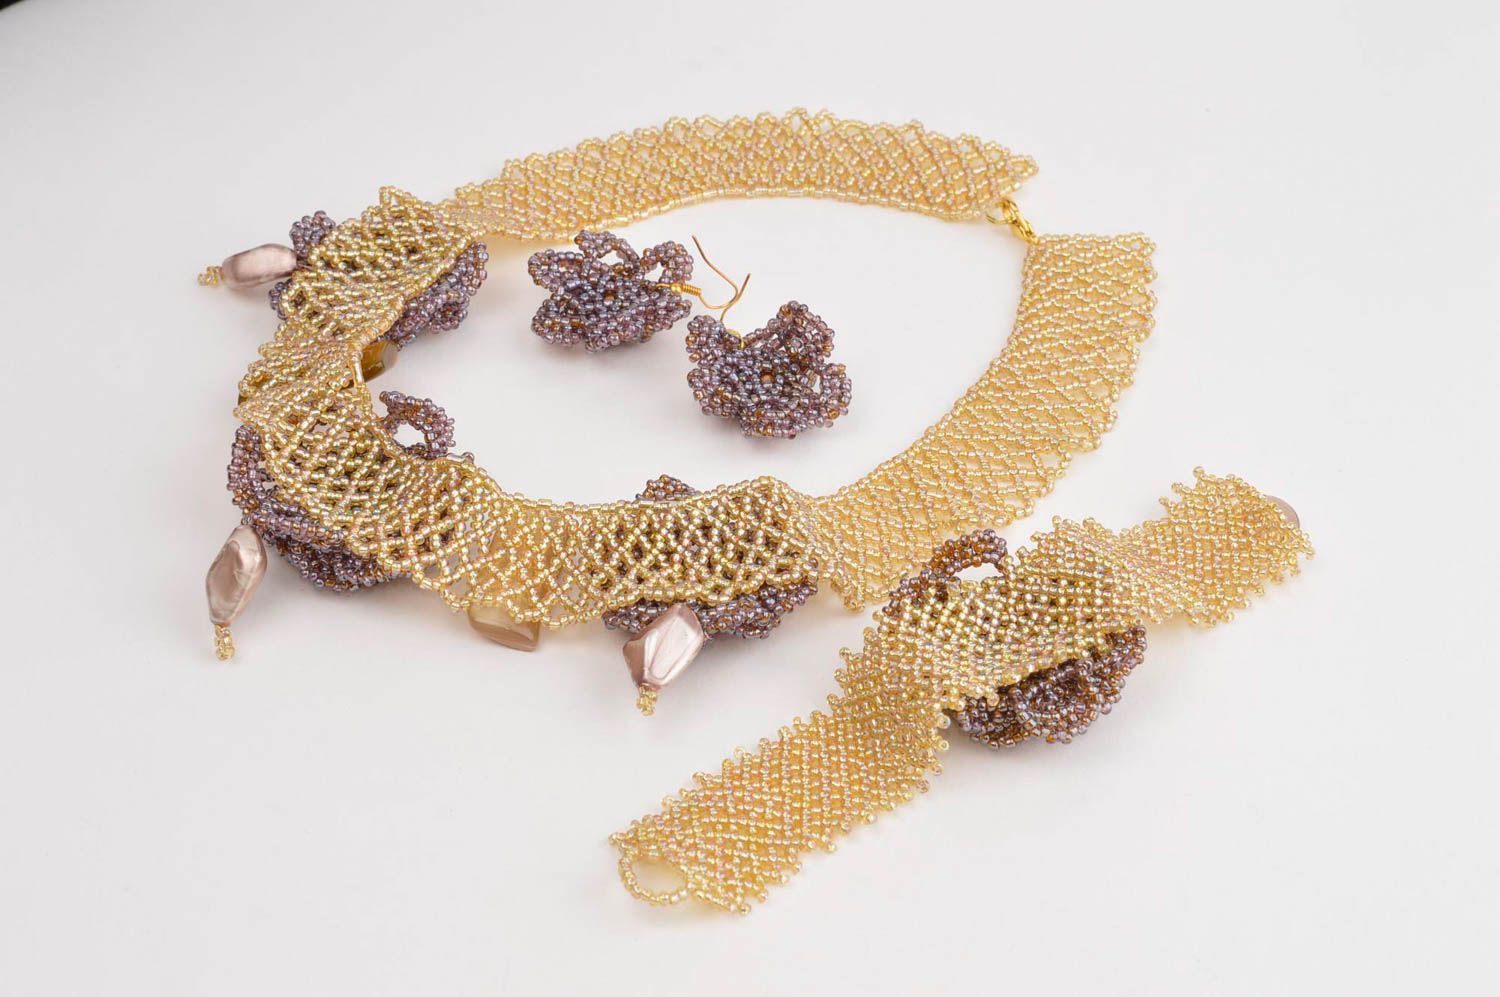 Handmade beaded necklace earrings bracelet designs artisan jewelry set photo 5